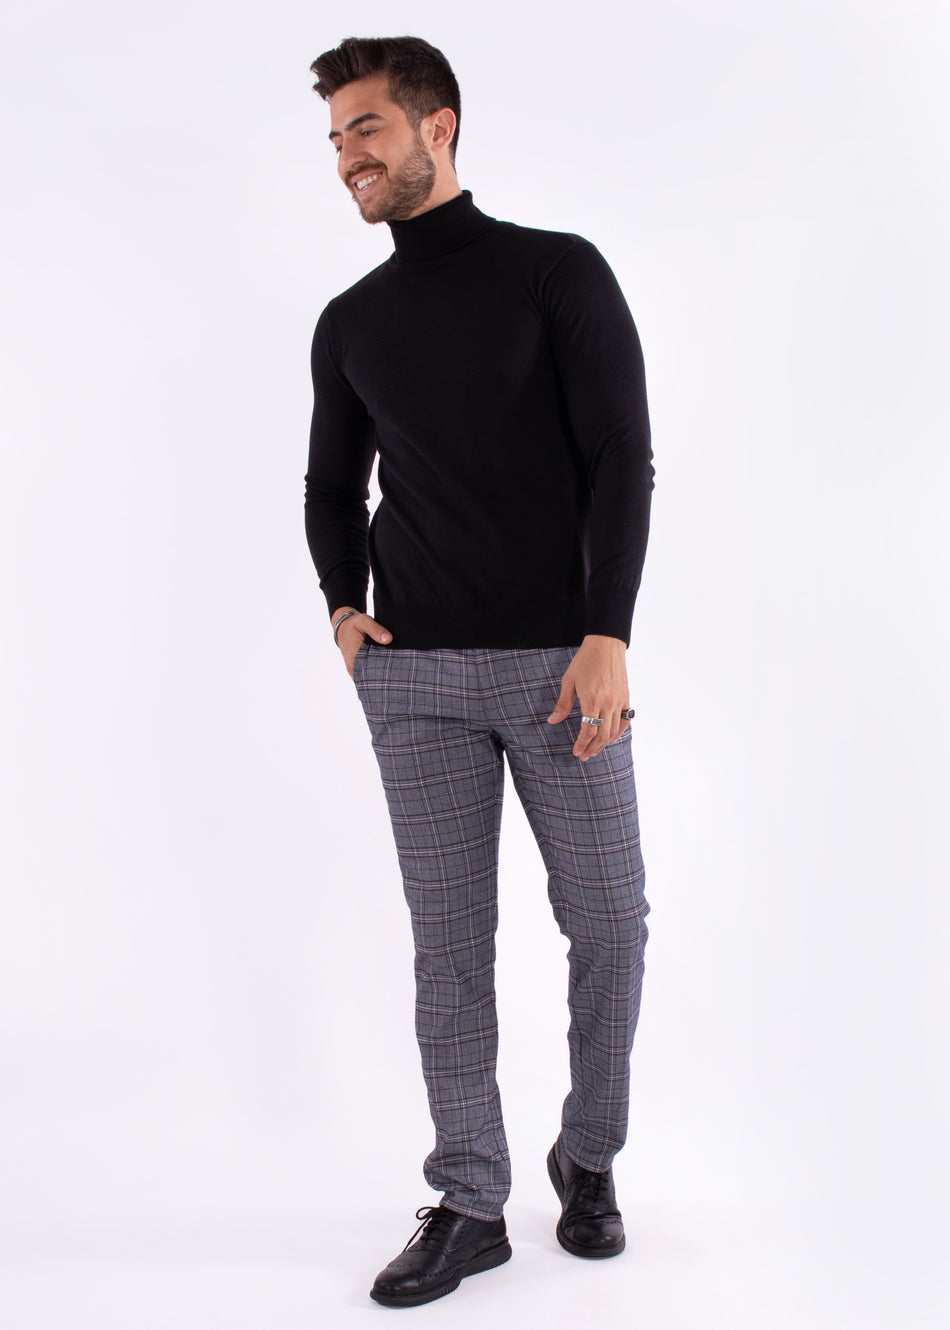 Men's Essentials Turtleneck Sweater Black